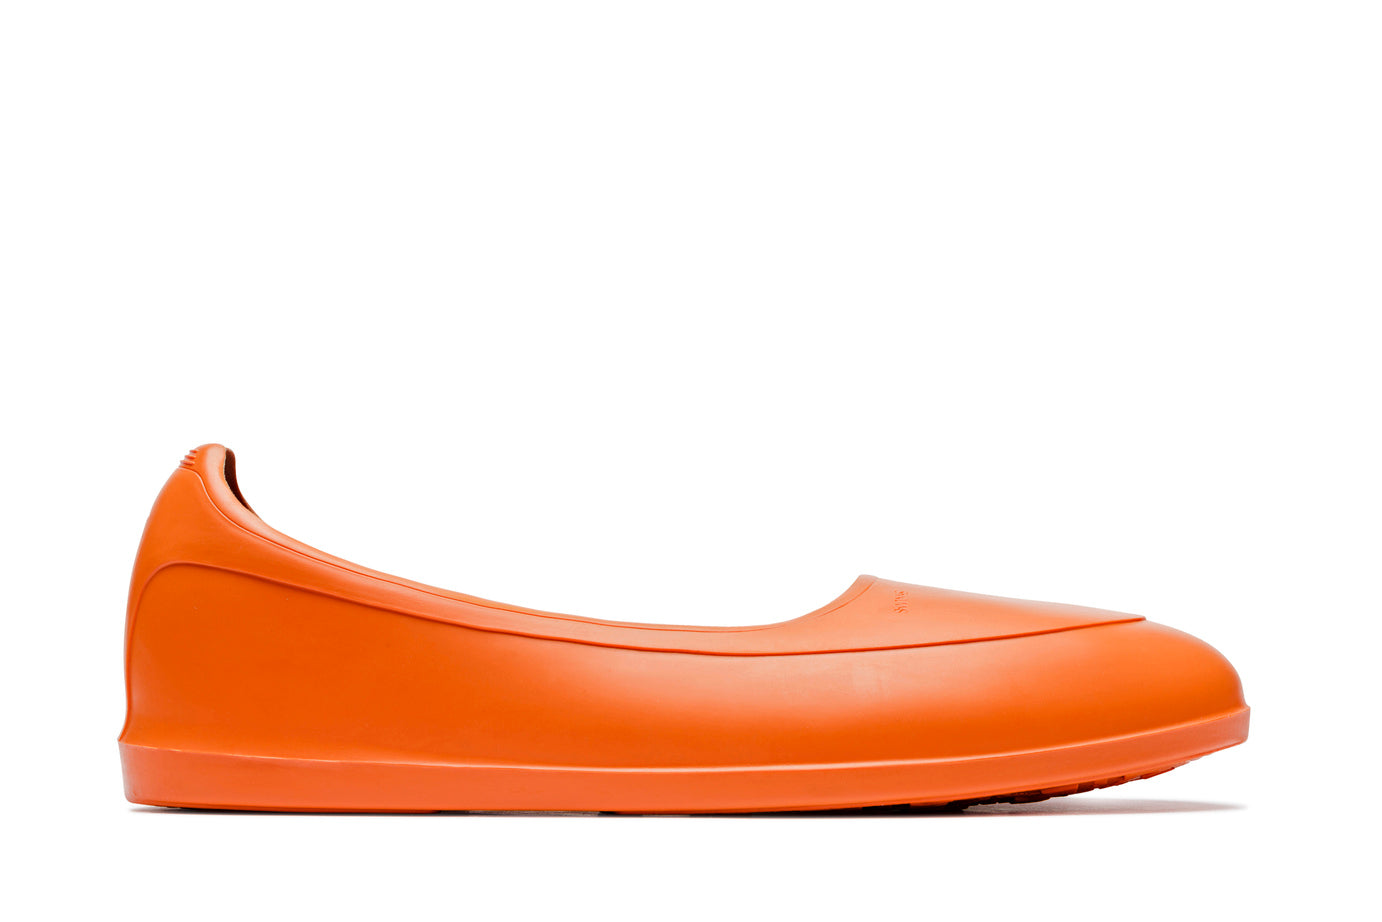 Swims rubber shoe galosh orange - side